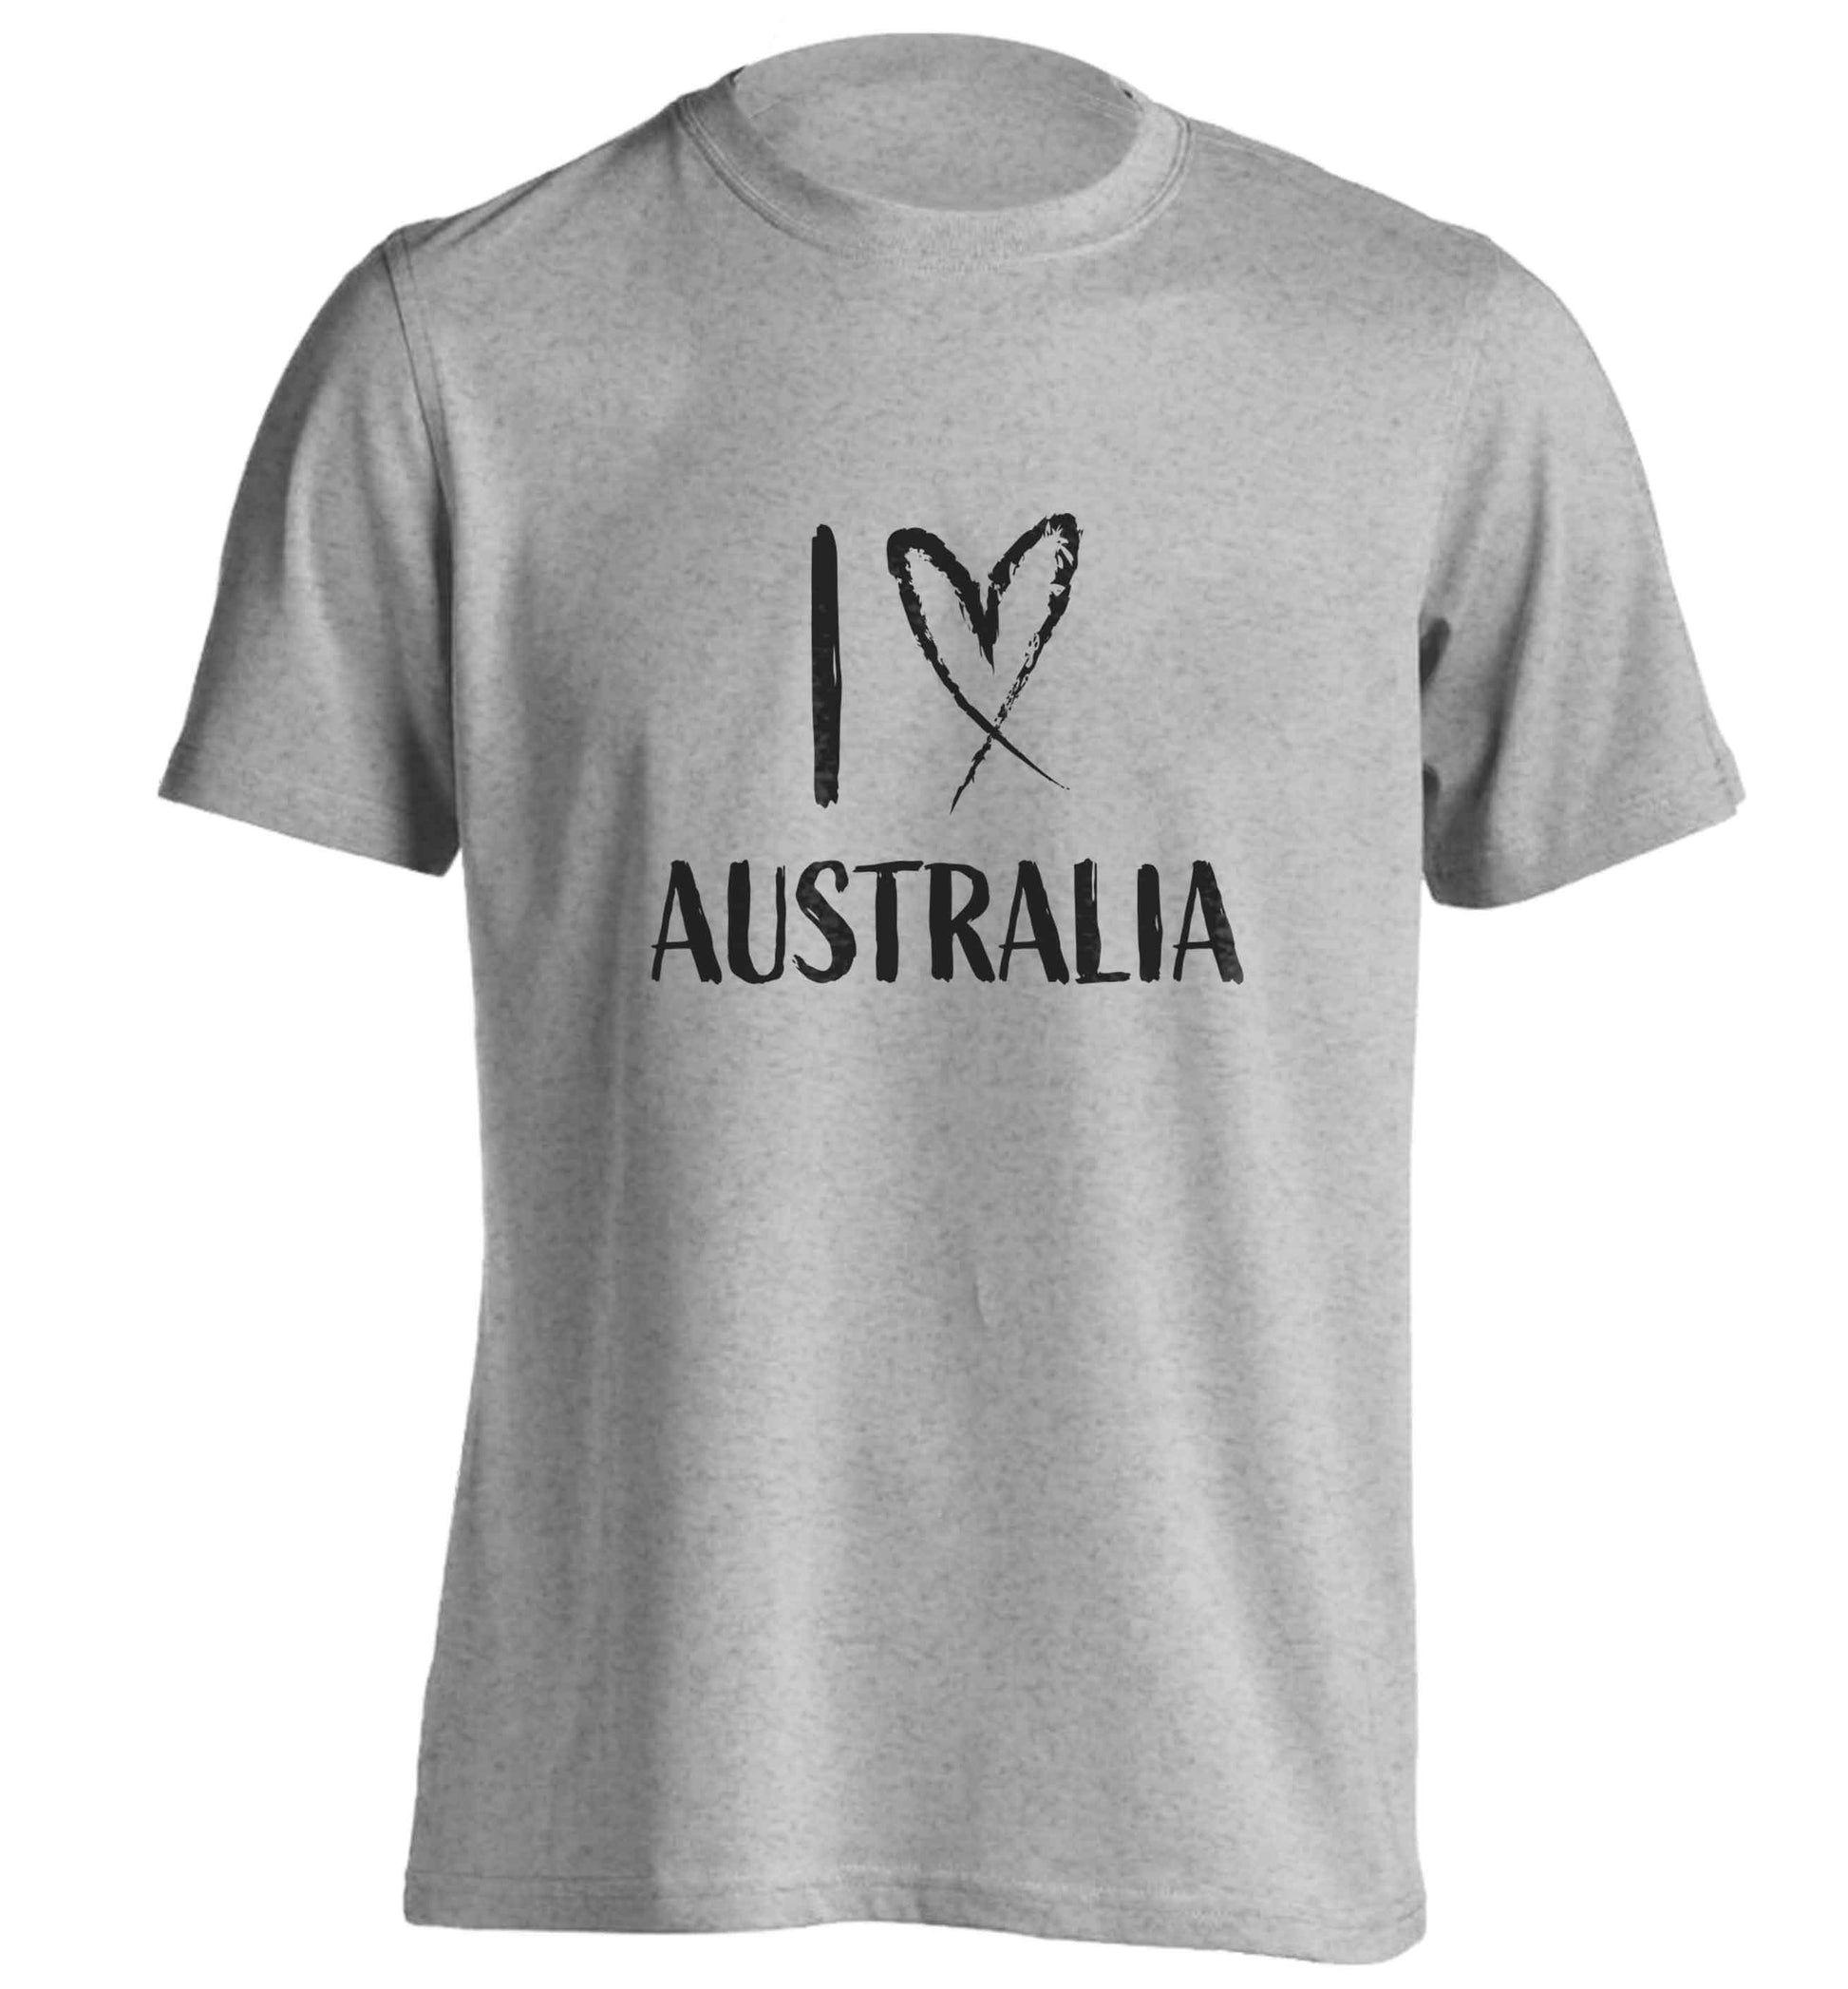 I Love Australia adults unisex grey Tshirt 2XL